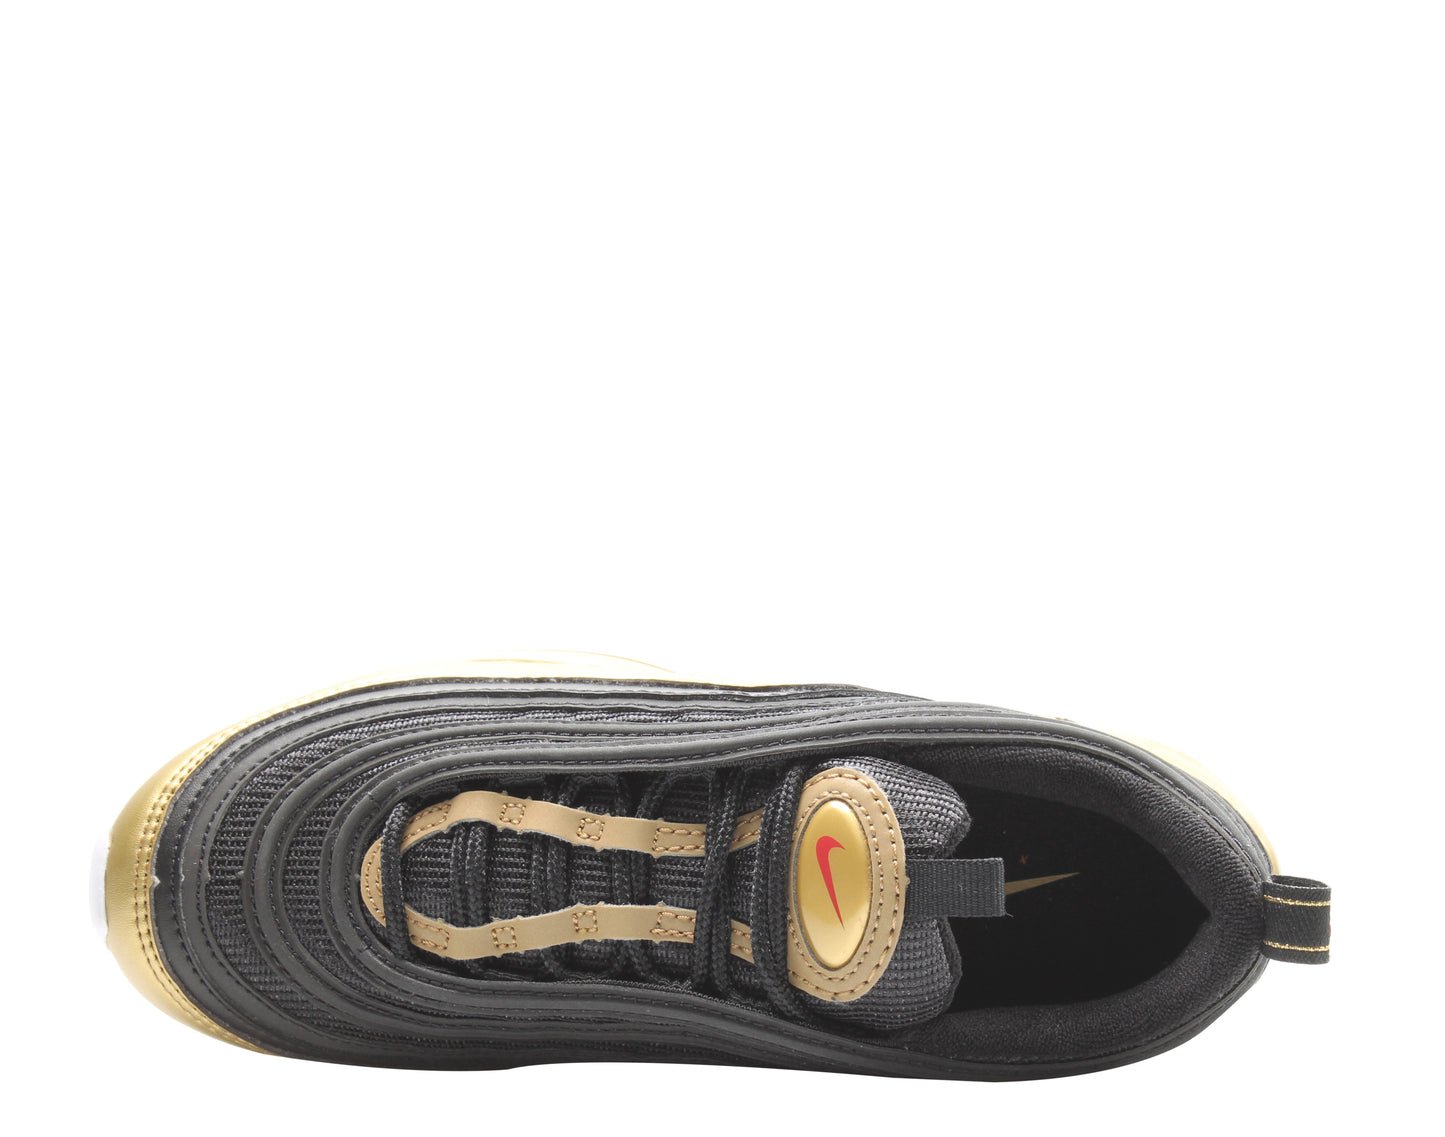 Nike Air Max 97 QS Black/Varsity Red/Gold Men's Running Shoes AT5458-002